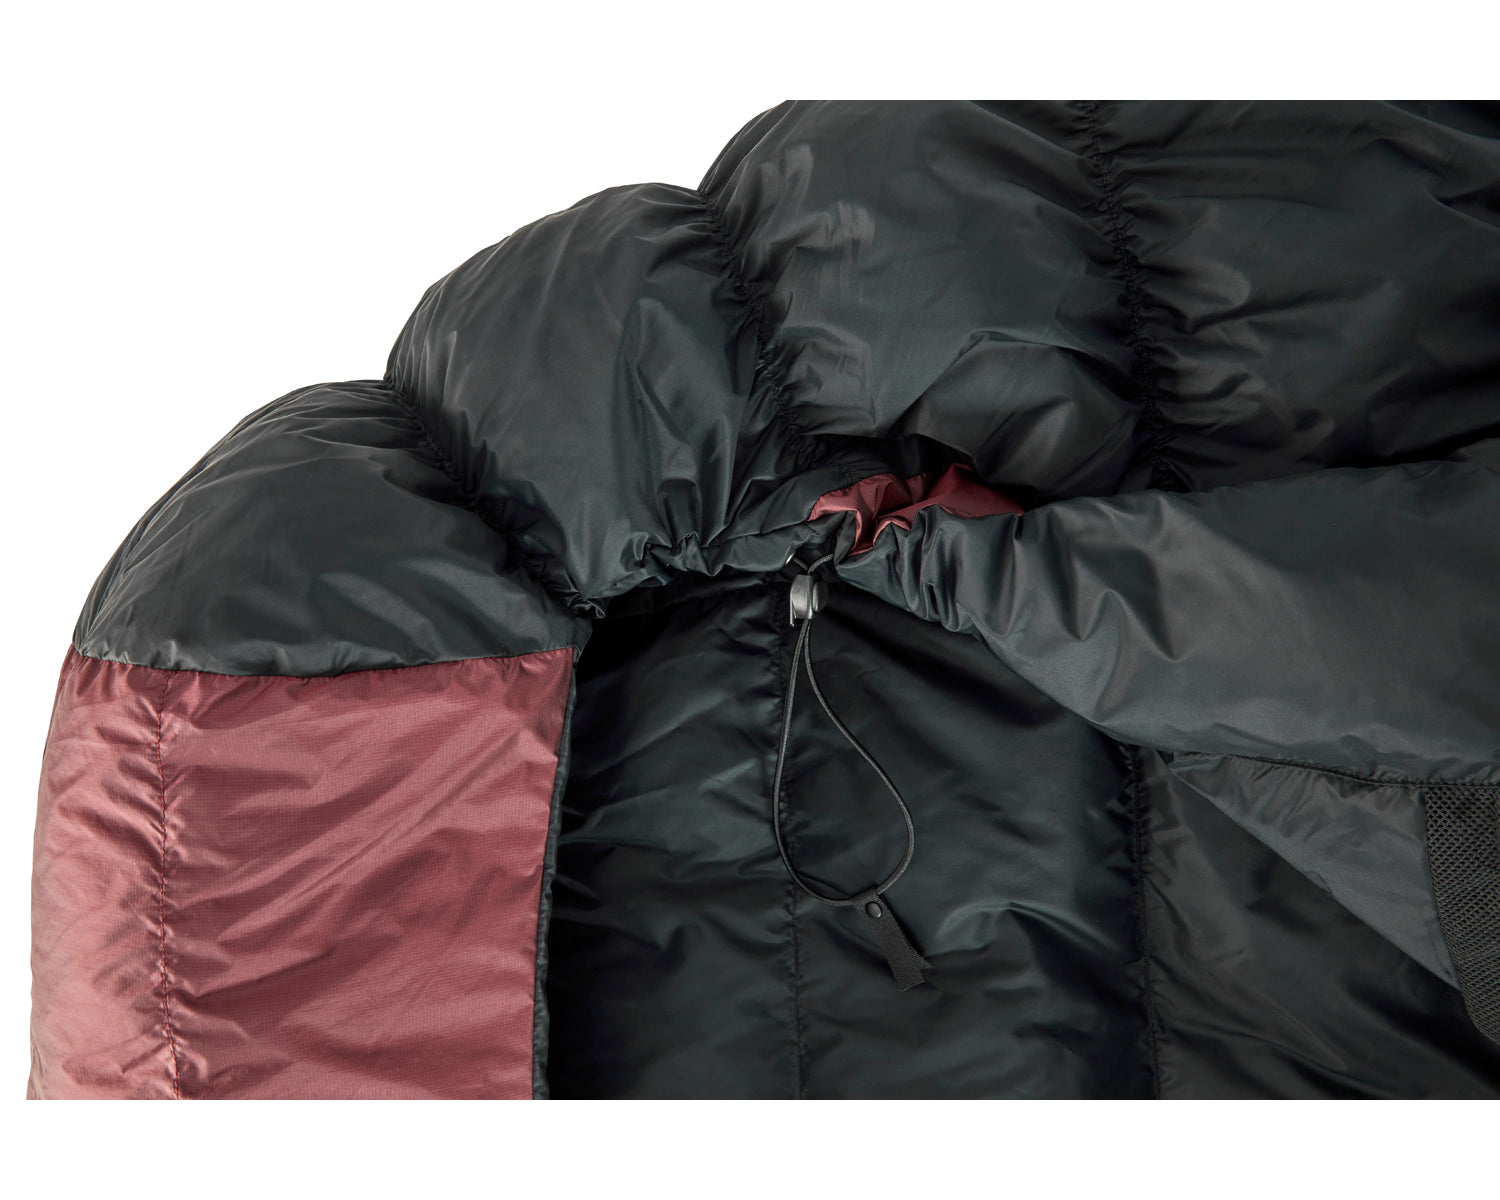 Voyage 300 sleeping bag (RIGHT ZIP) - Ribbon red / Black